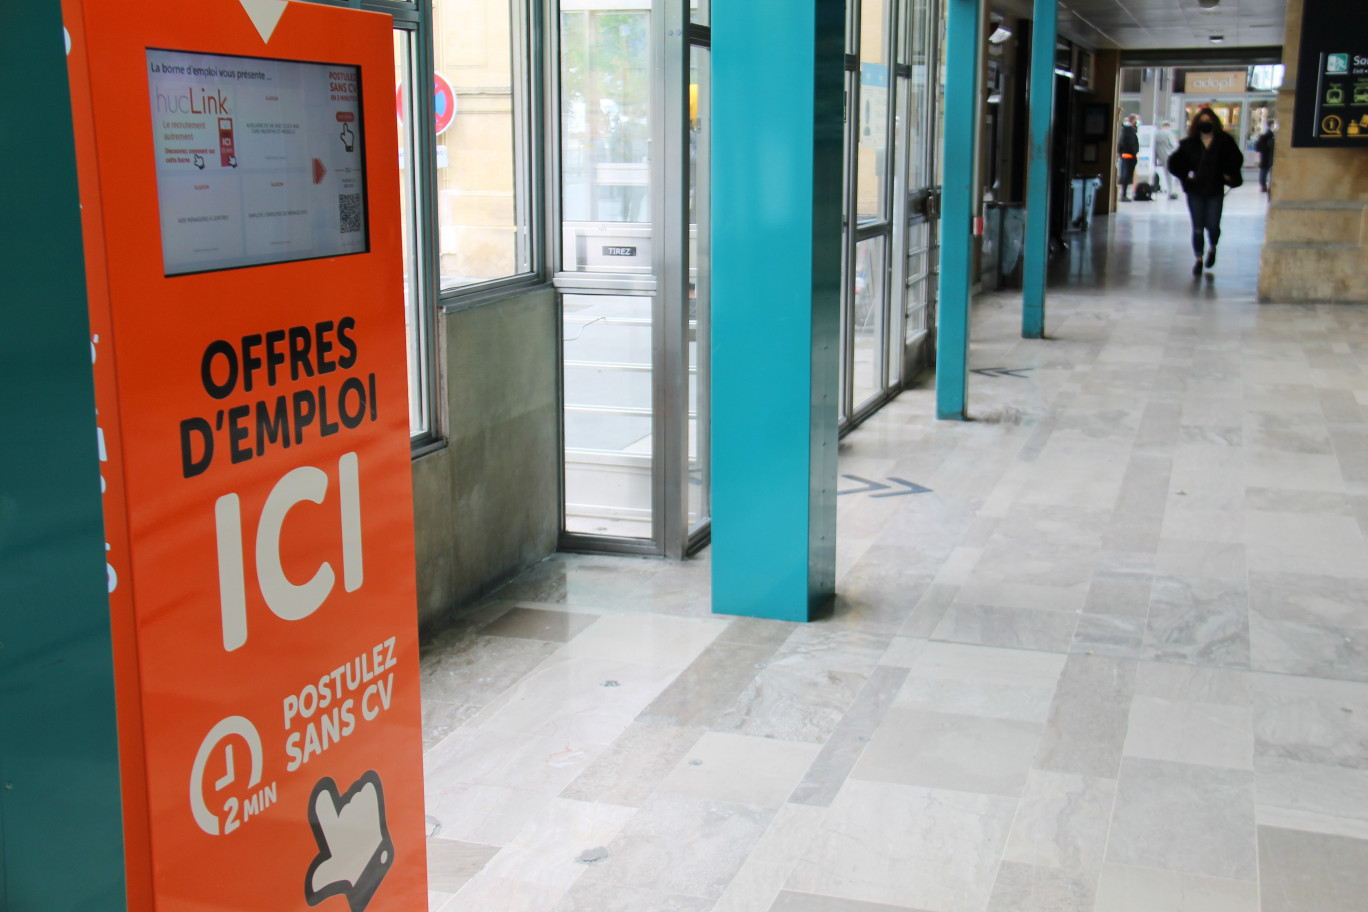 Emploi : une borne interactive en gare de Nancy